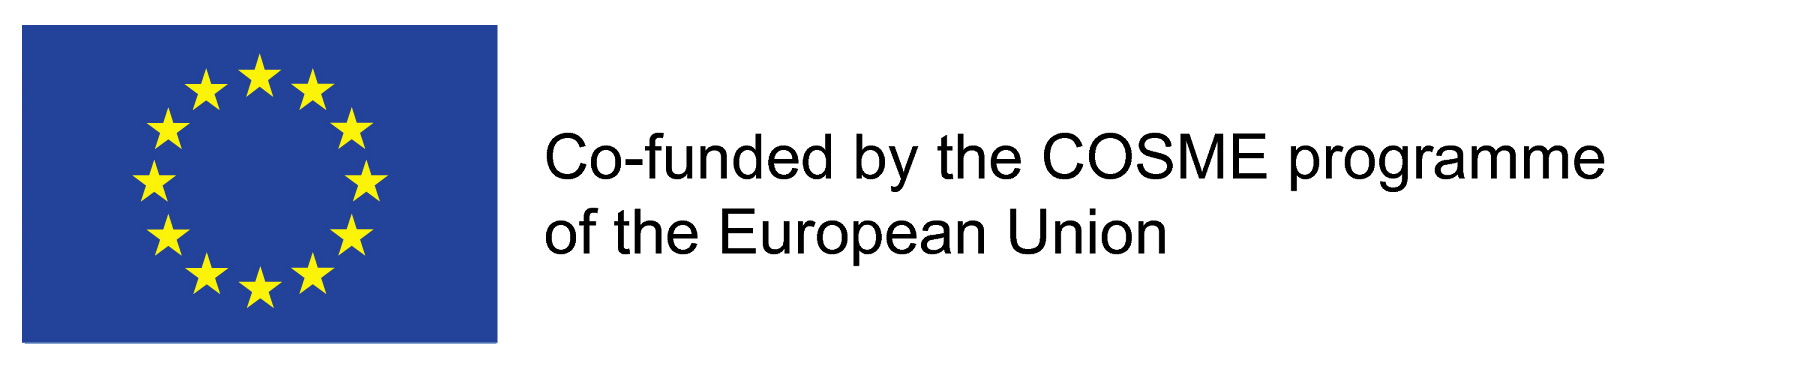 Cosme logo 